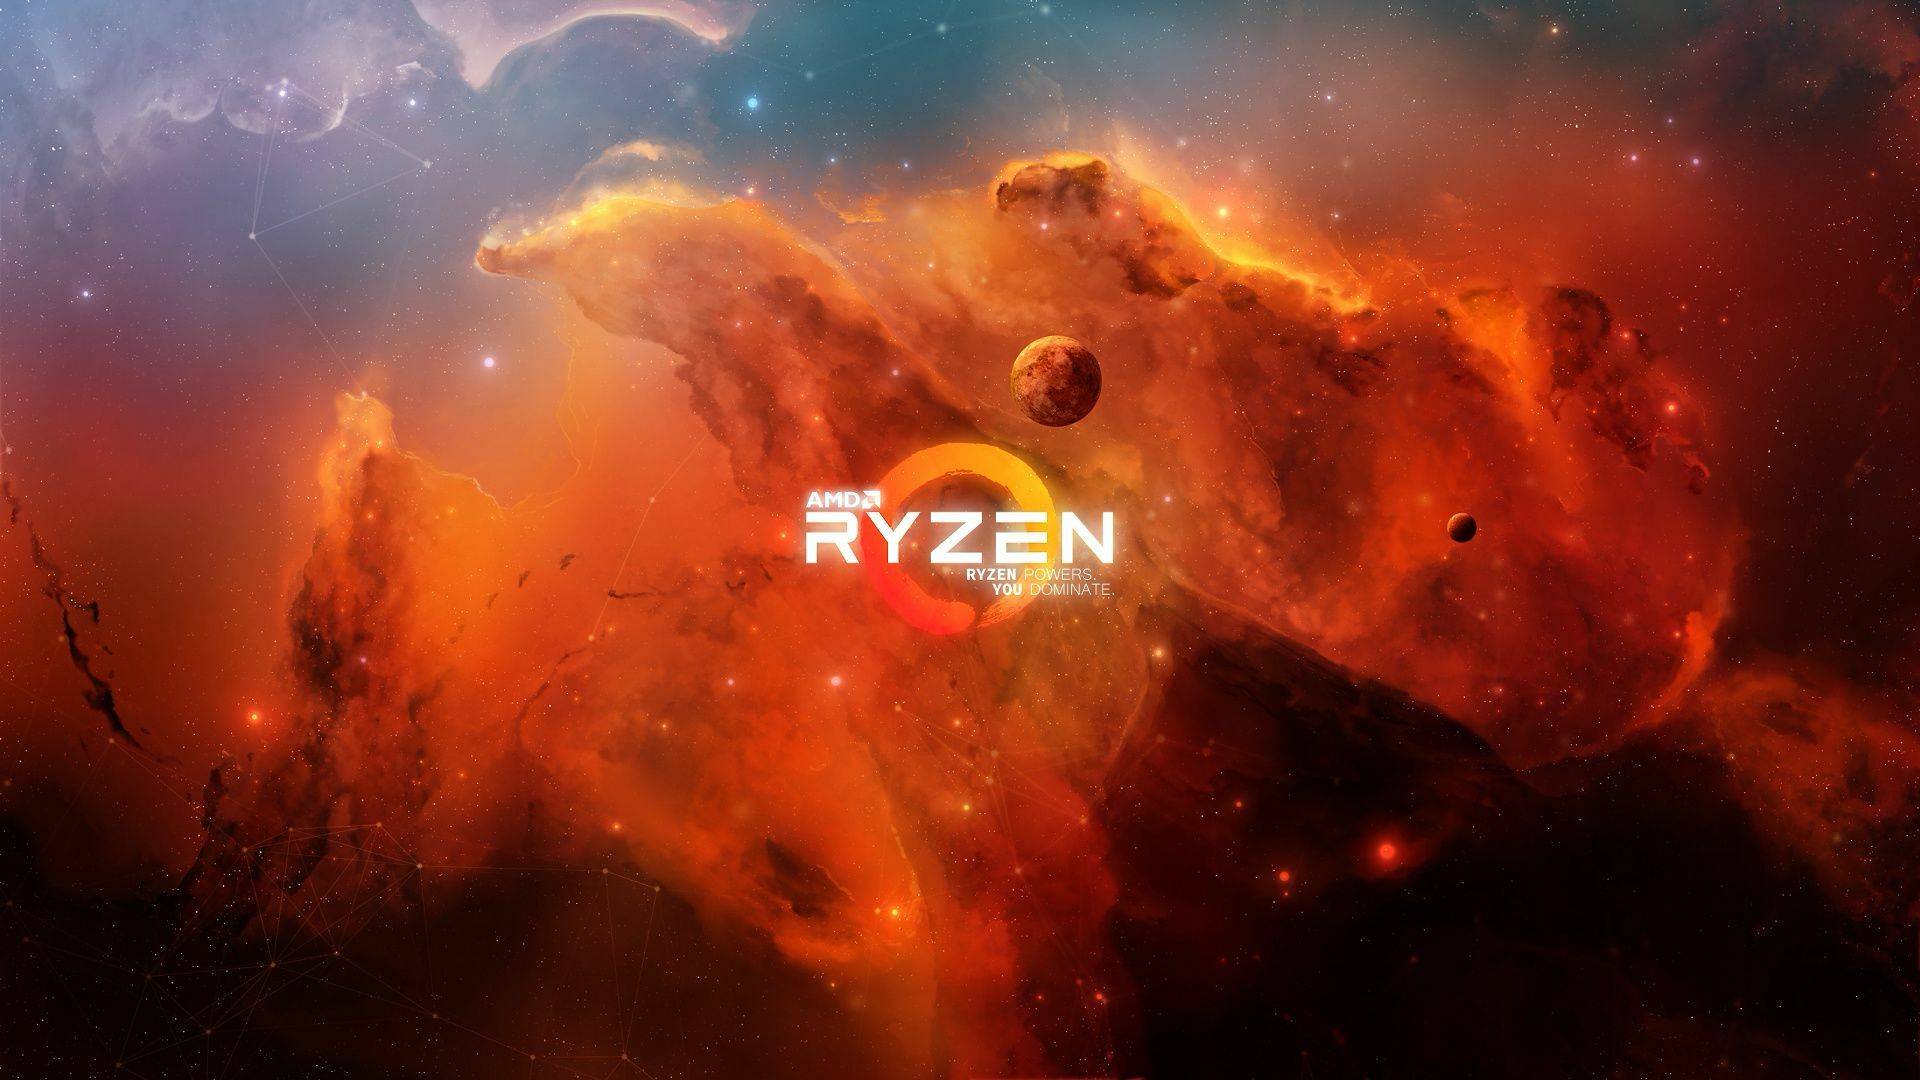 AMD Ryzen 2K live wallpaper [DOWNLOAD FREE]